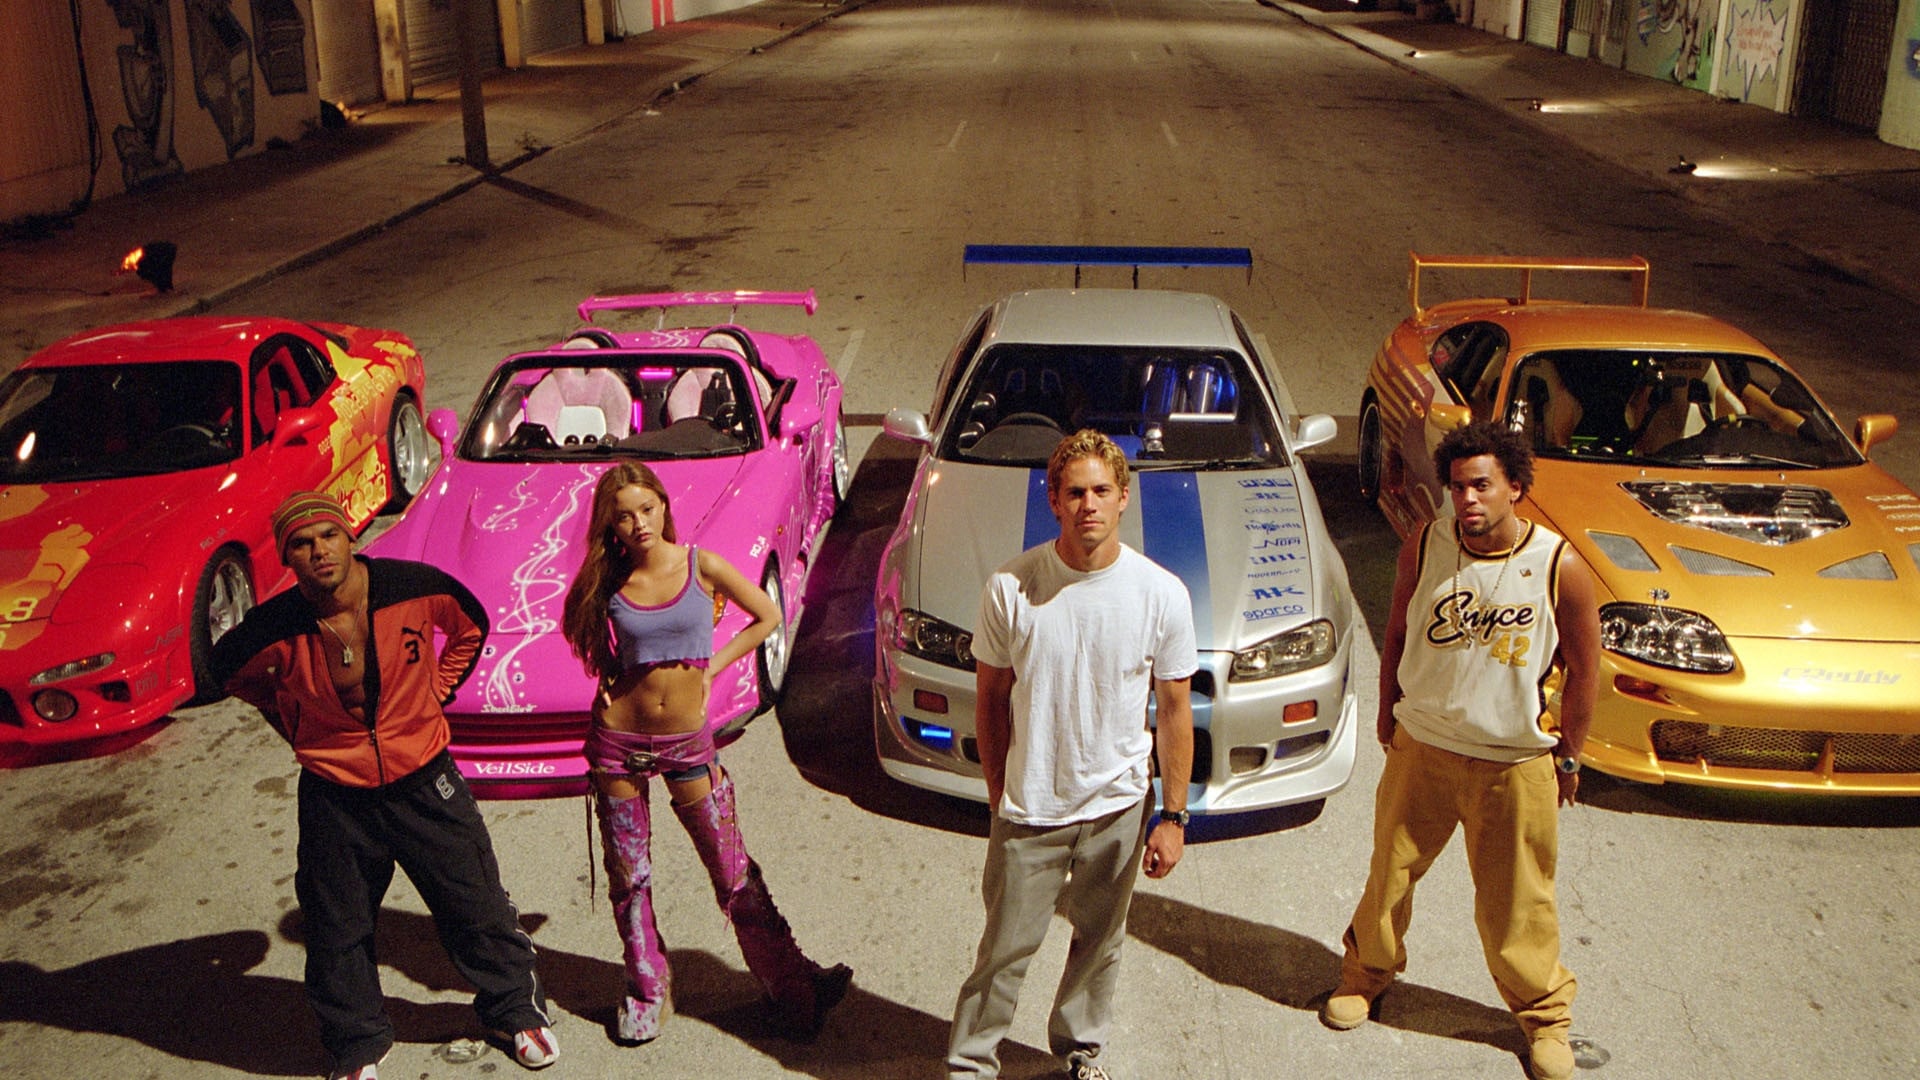 2 Fast 2 Furious: A todo gas 2 (2003)